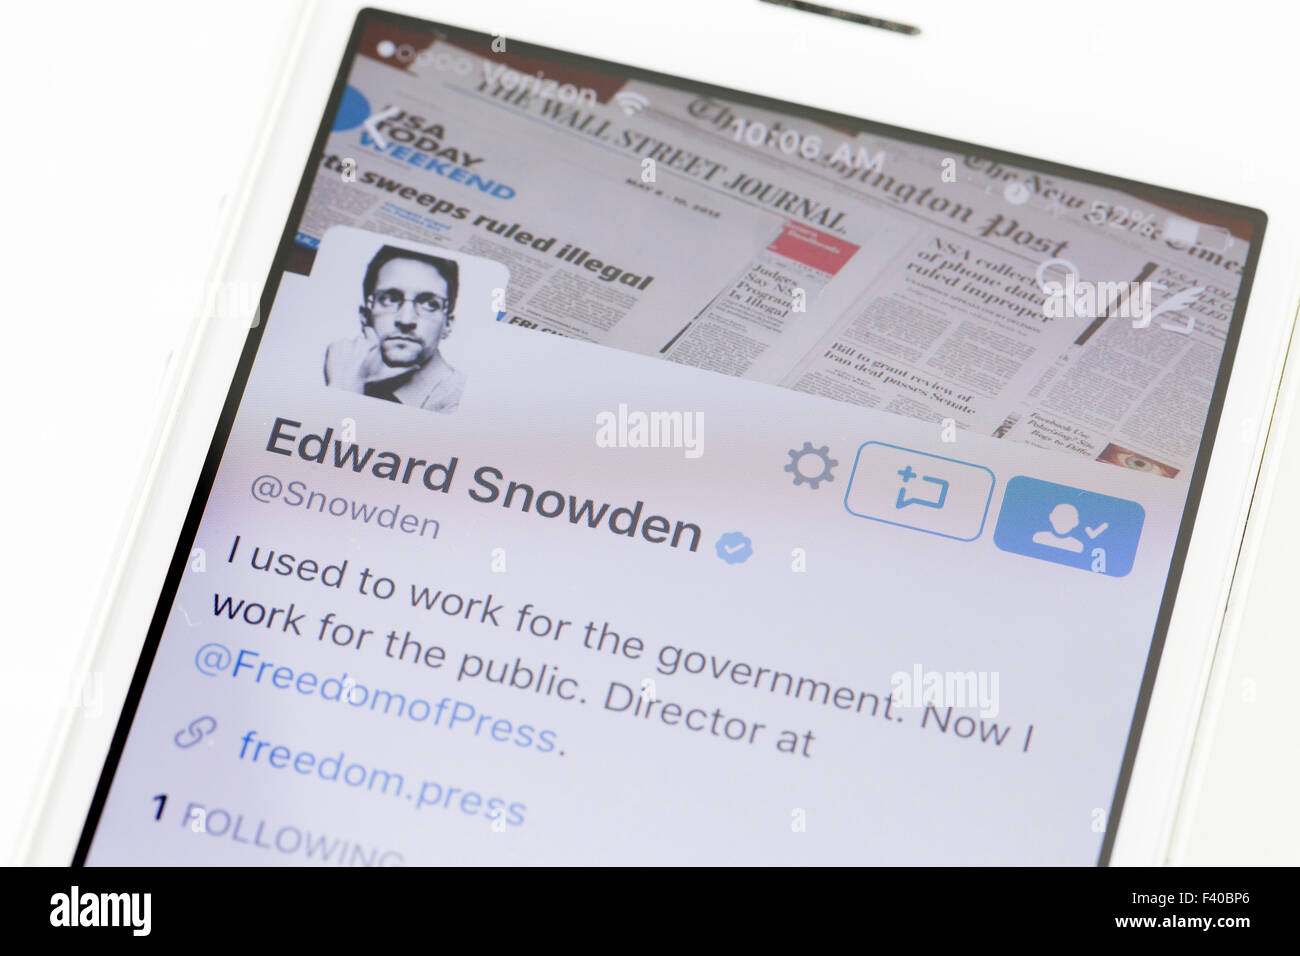 Edward Snowden's Twitter profile  - USA Stock Photo